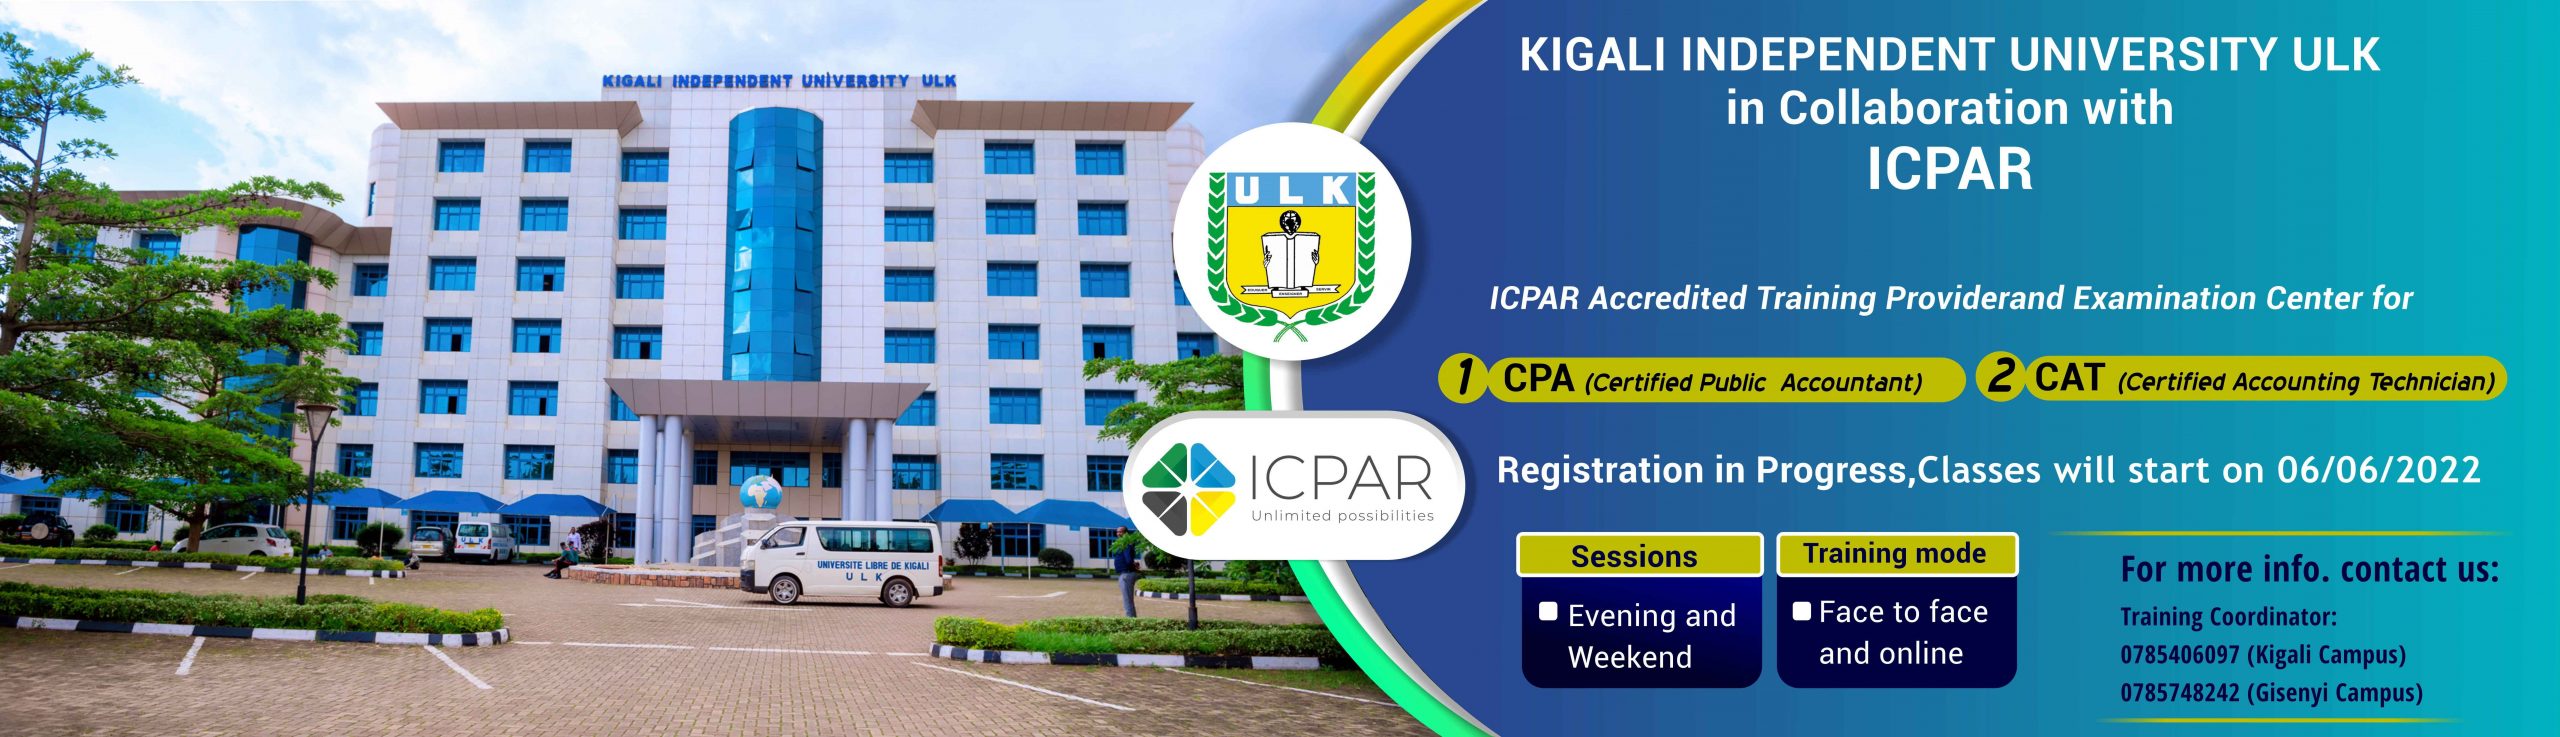 ULK Partnership with ICPAR